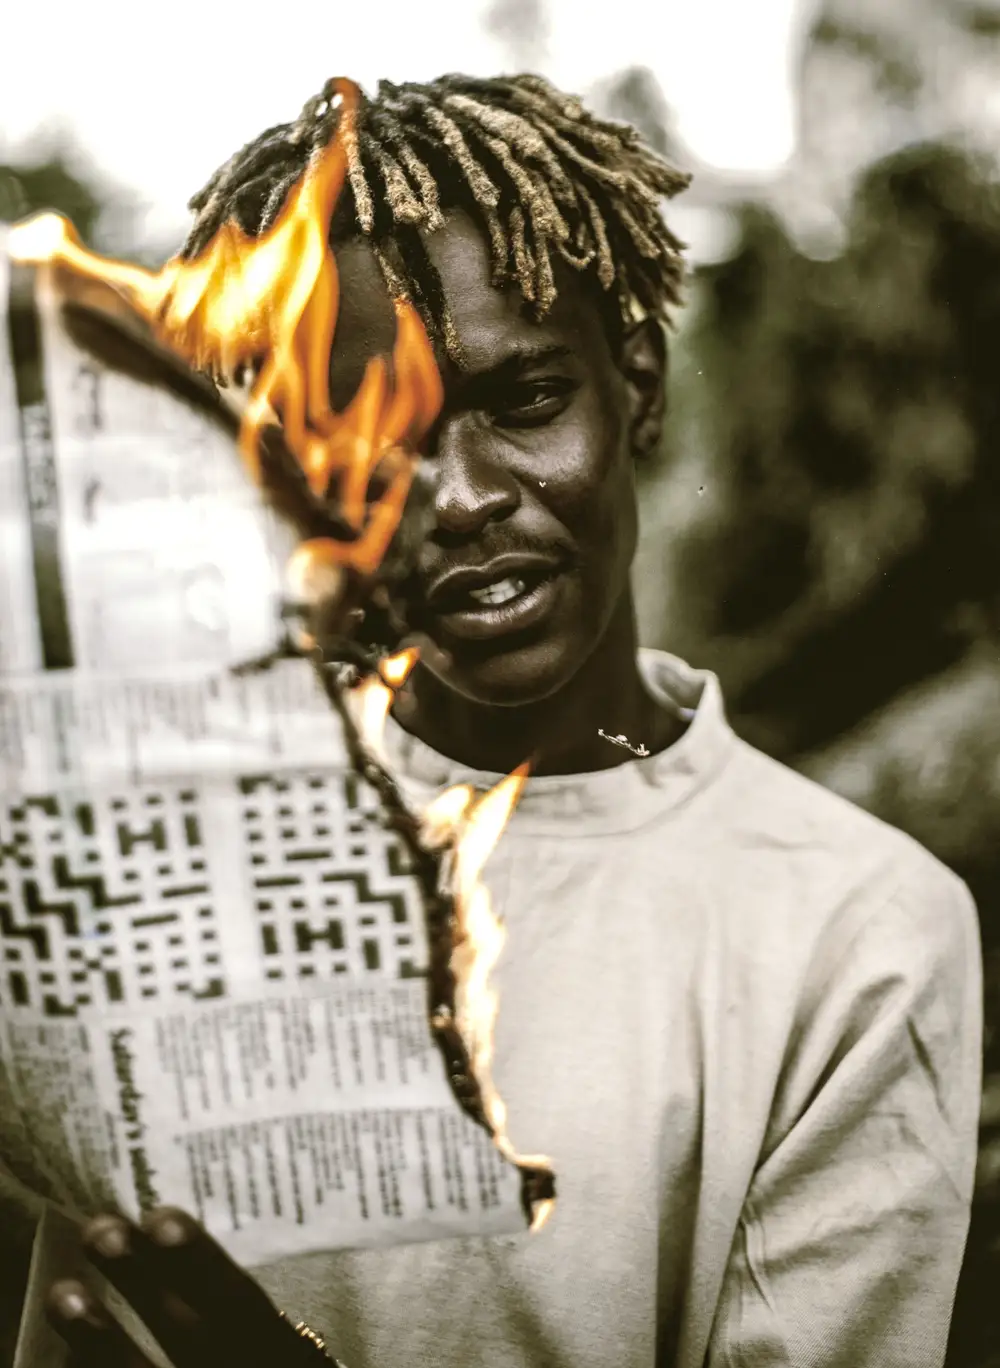 Man in dreadlocks holding a burning Newspaper